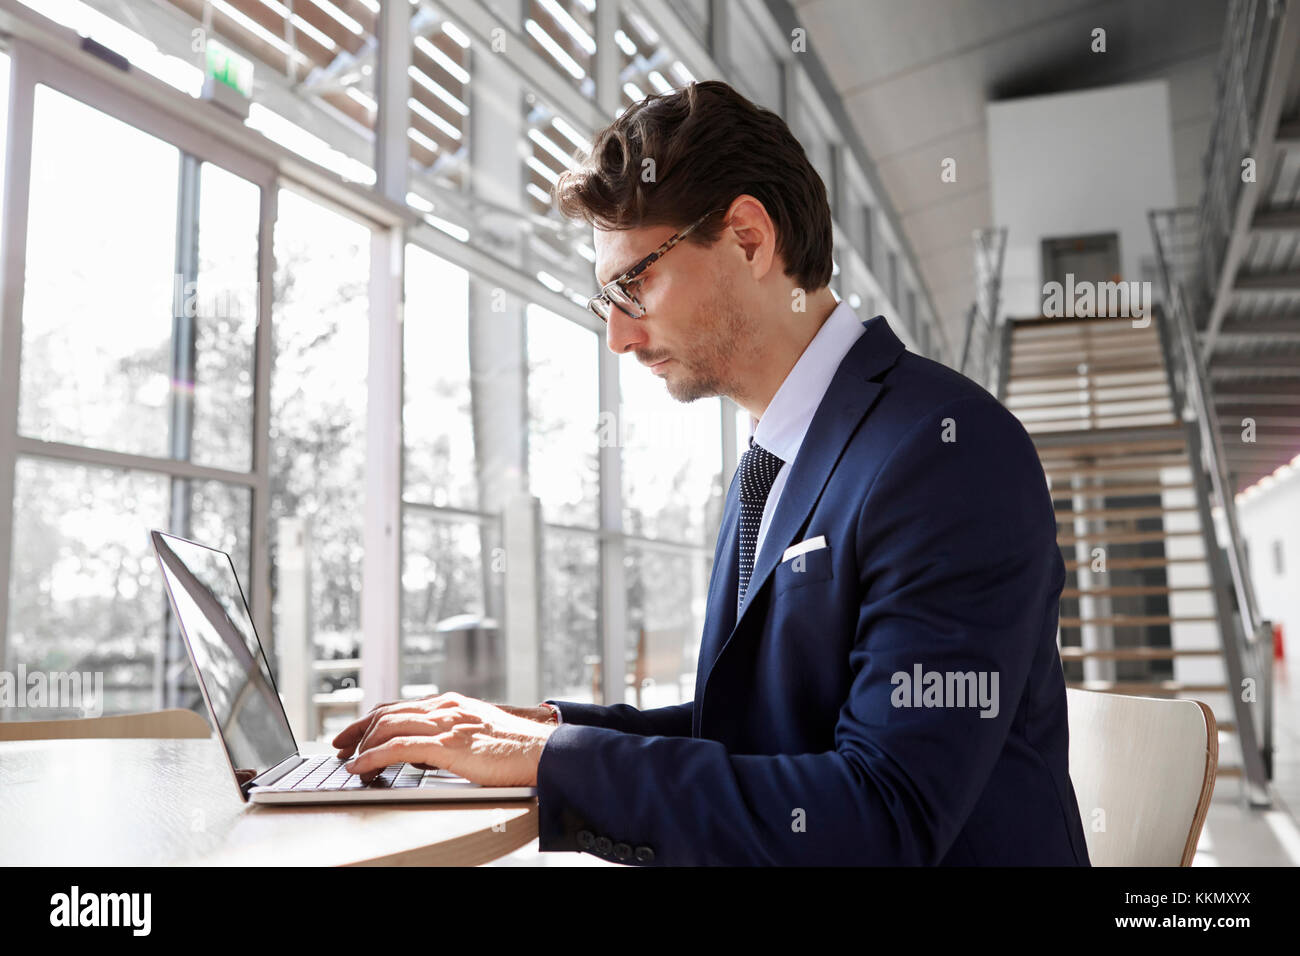 Young professional man using laptop, close up Stock Photo